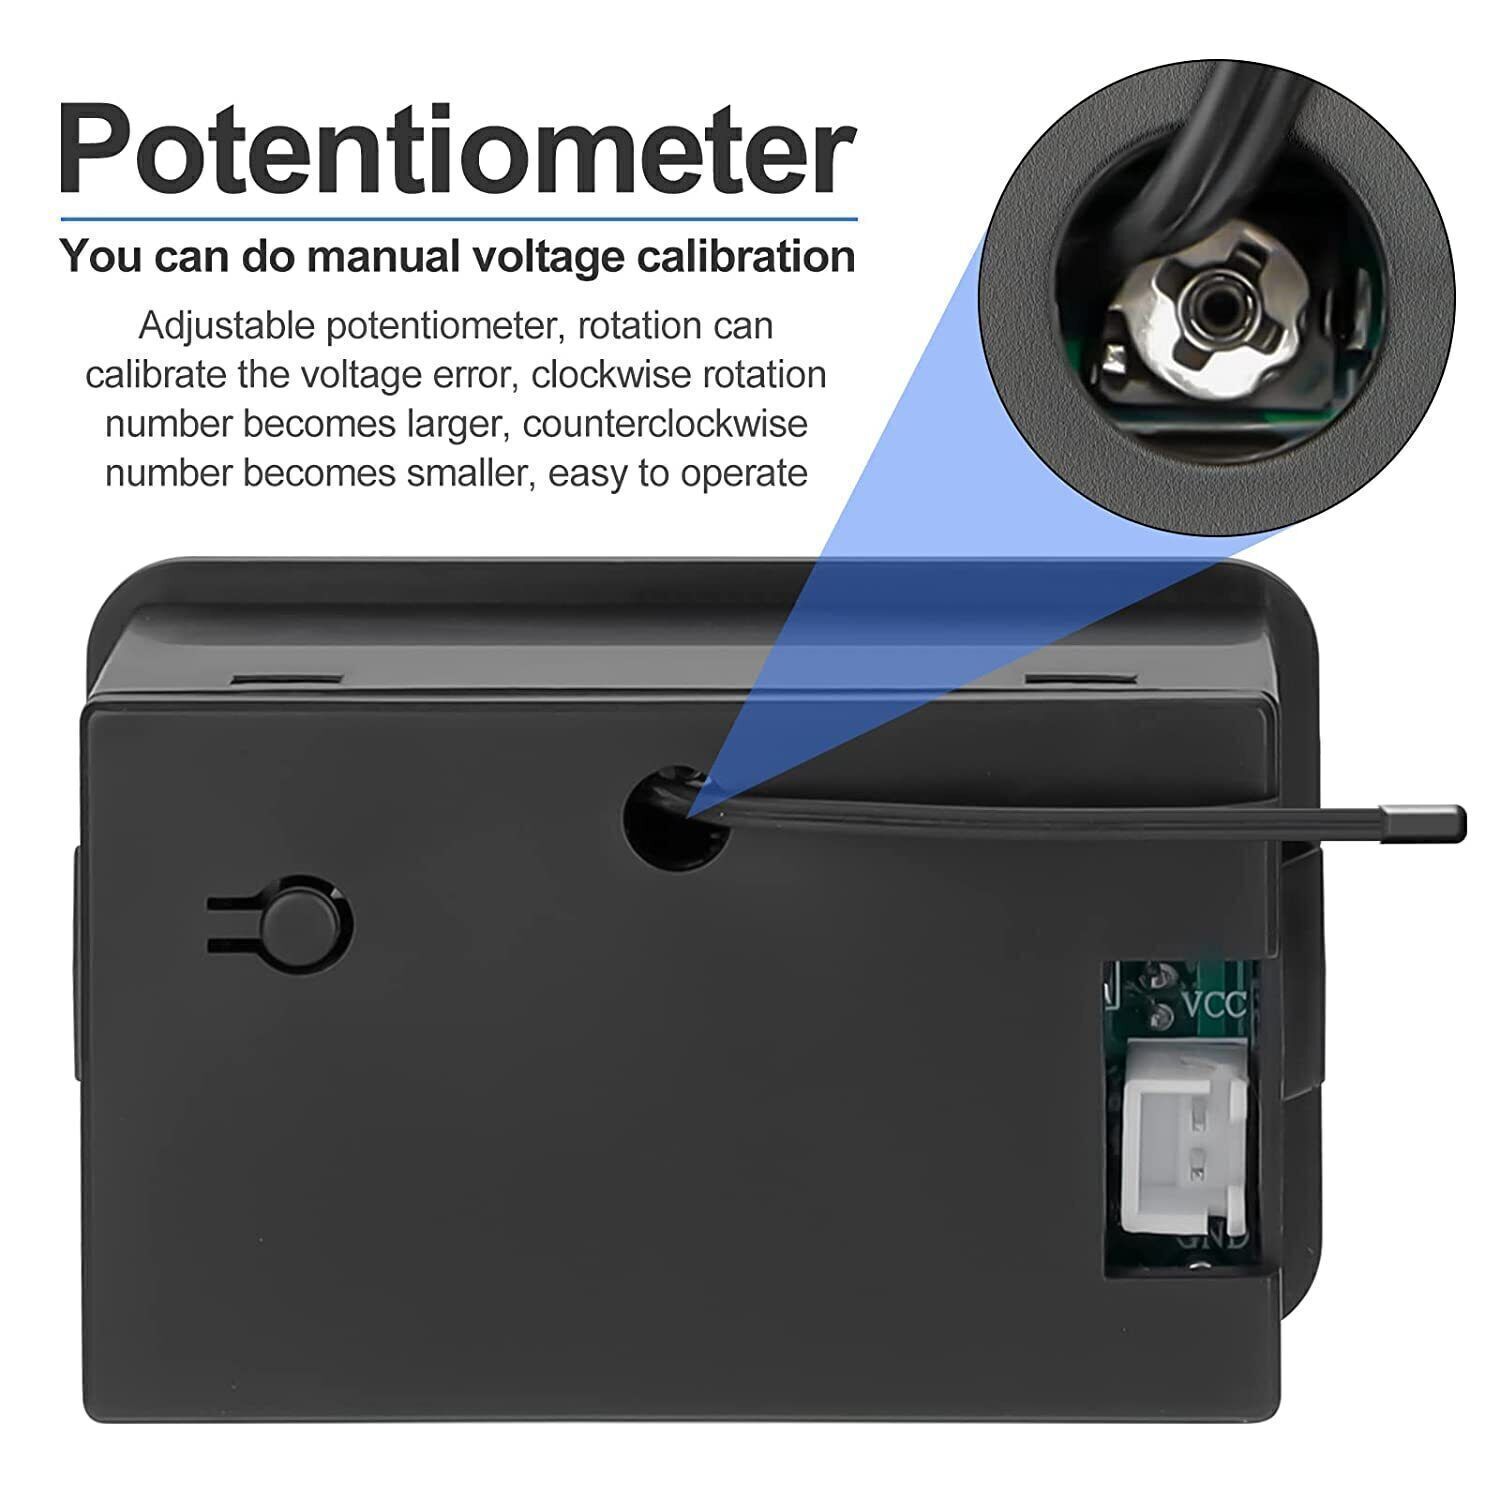 Batterie Kapazität Voltmeter Spannung Anzeige Volt Monitor LCD DC 12V 24V